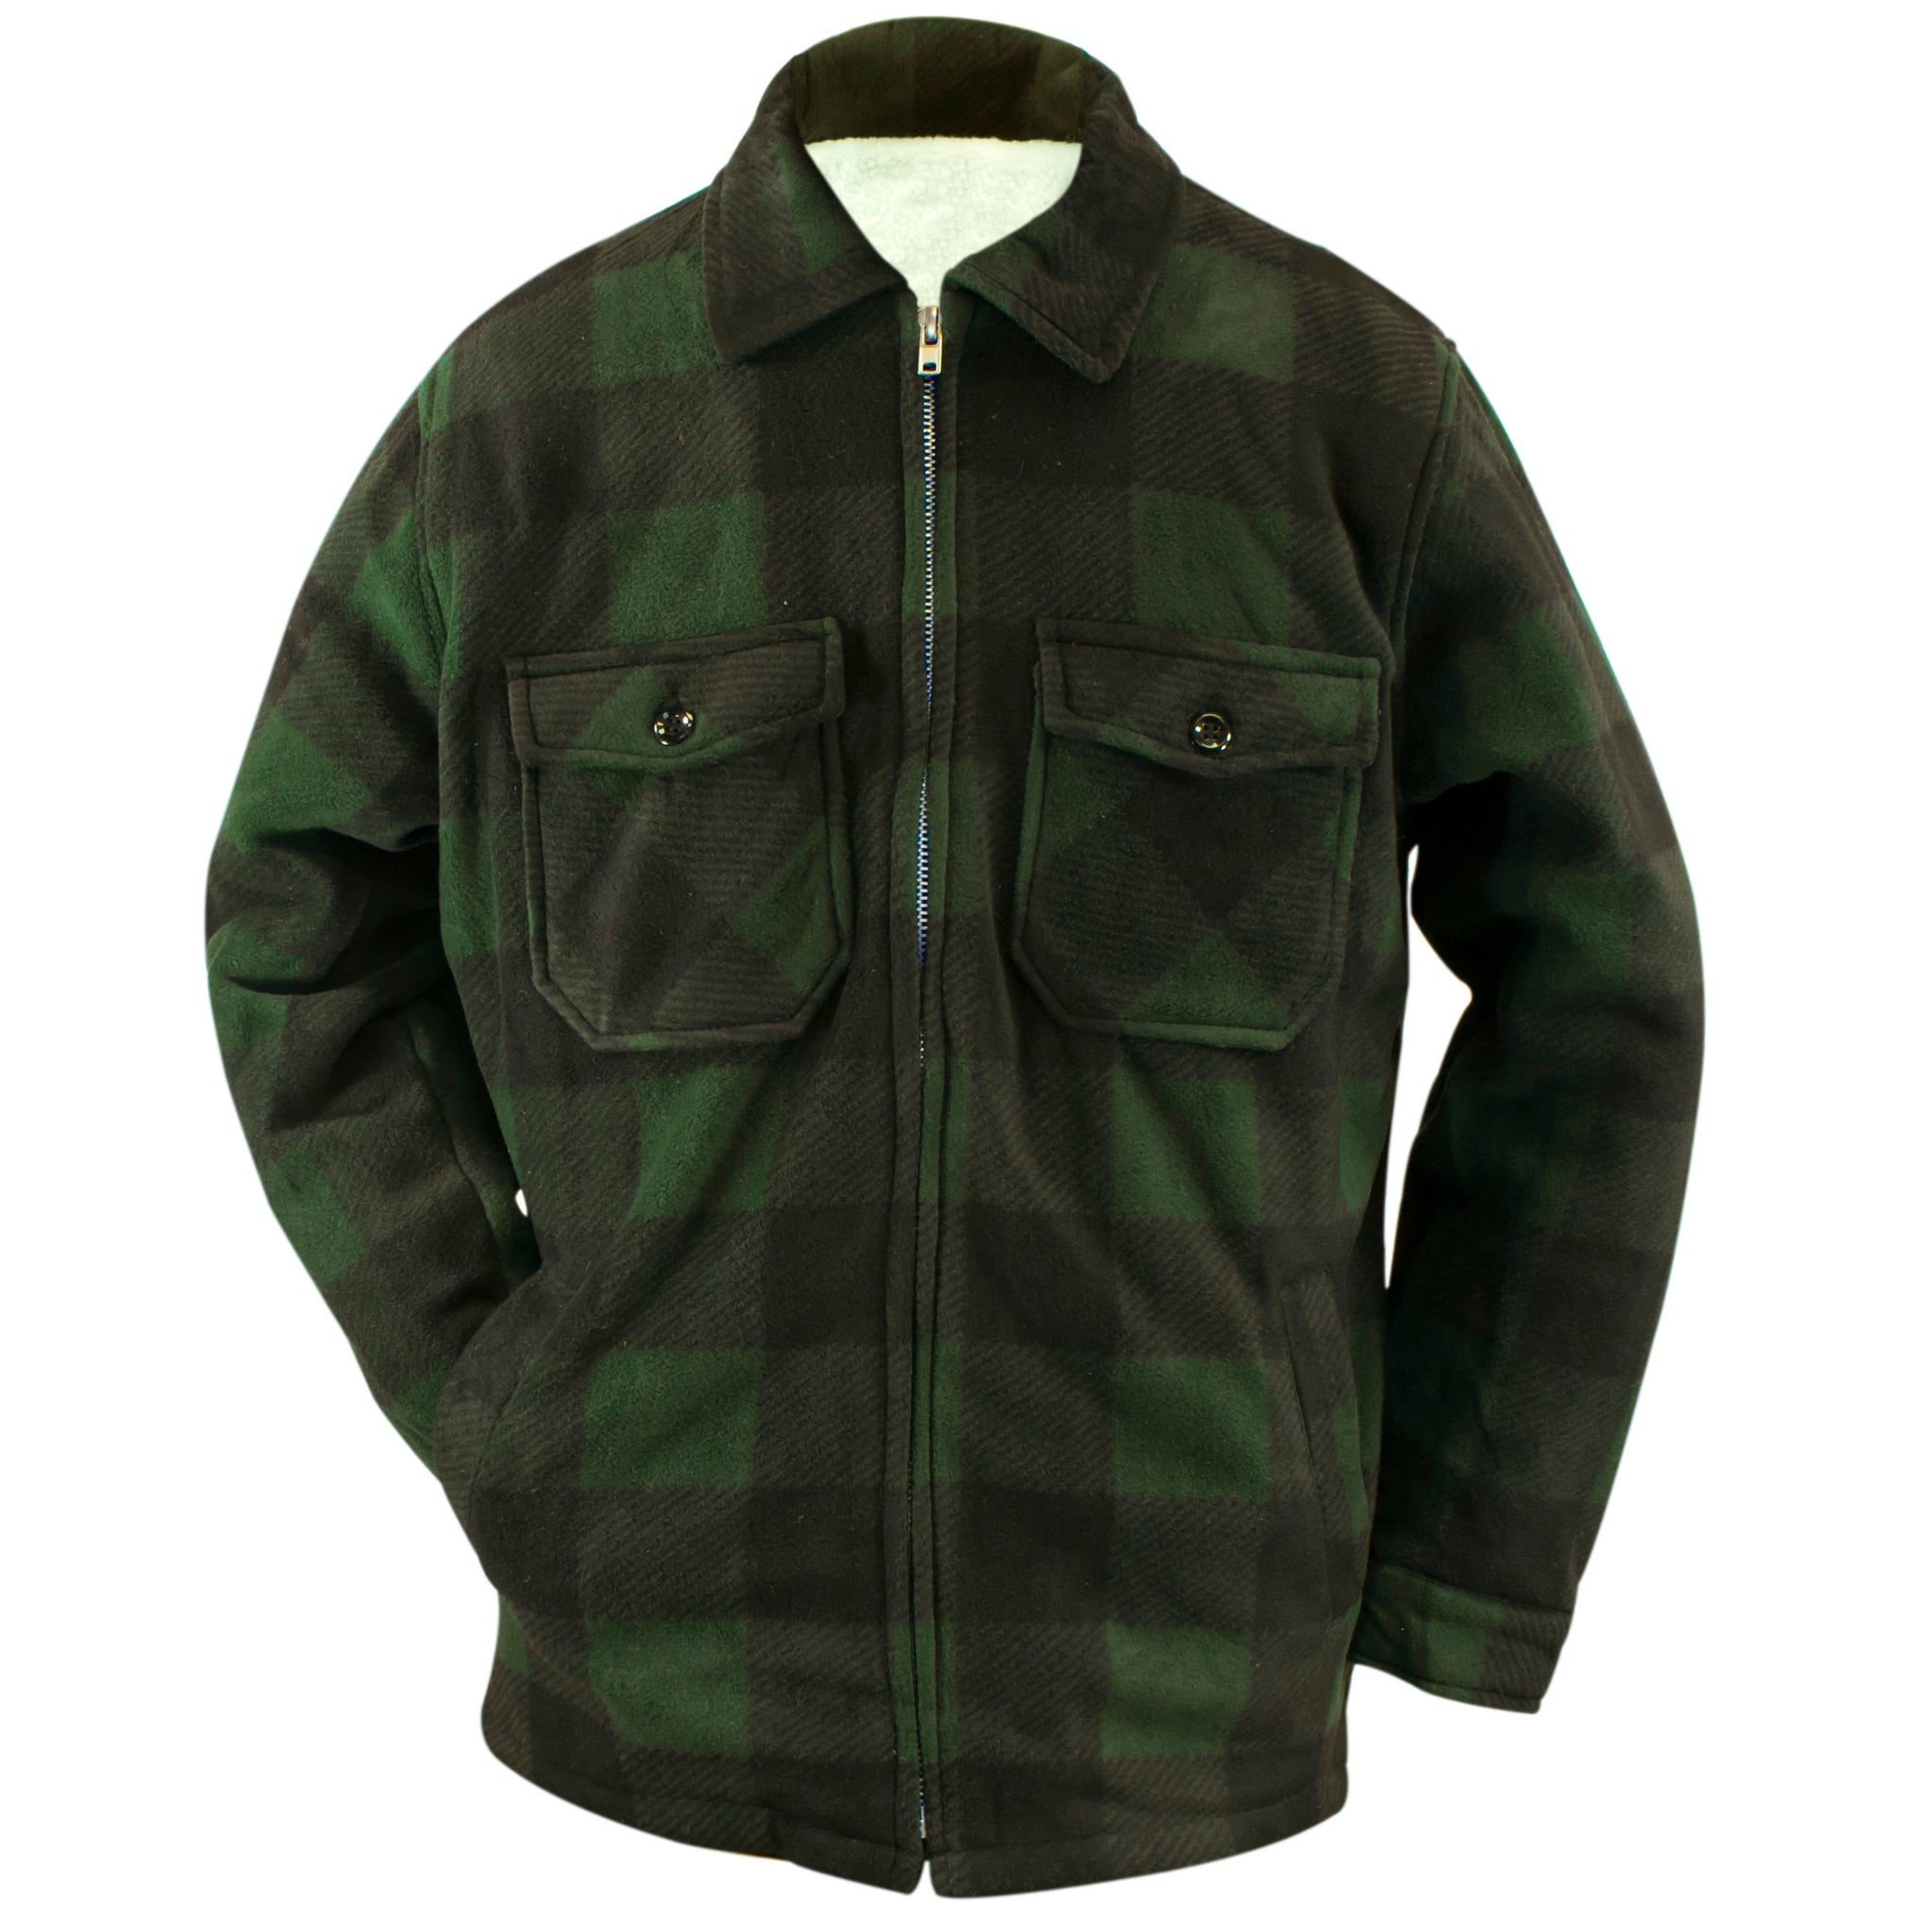 Maxxsel Men's Buffalo Plaid Fleece Lined Jacket M9109 – Good's Store Online